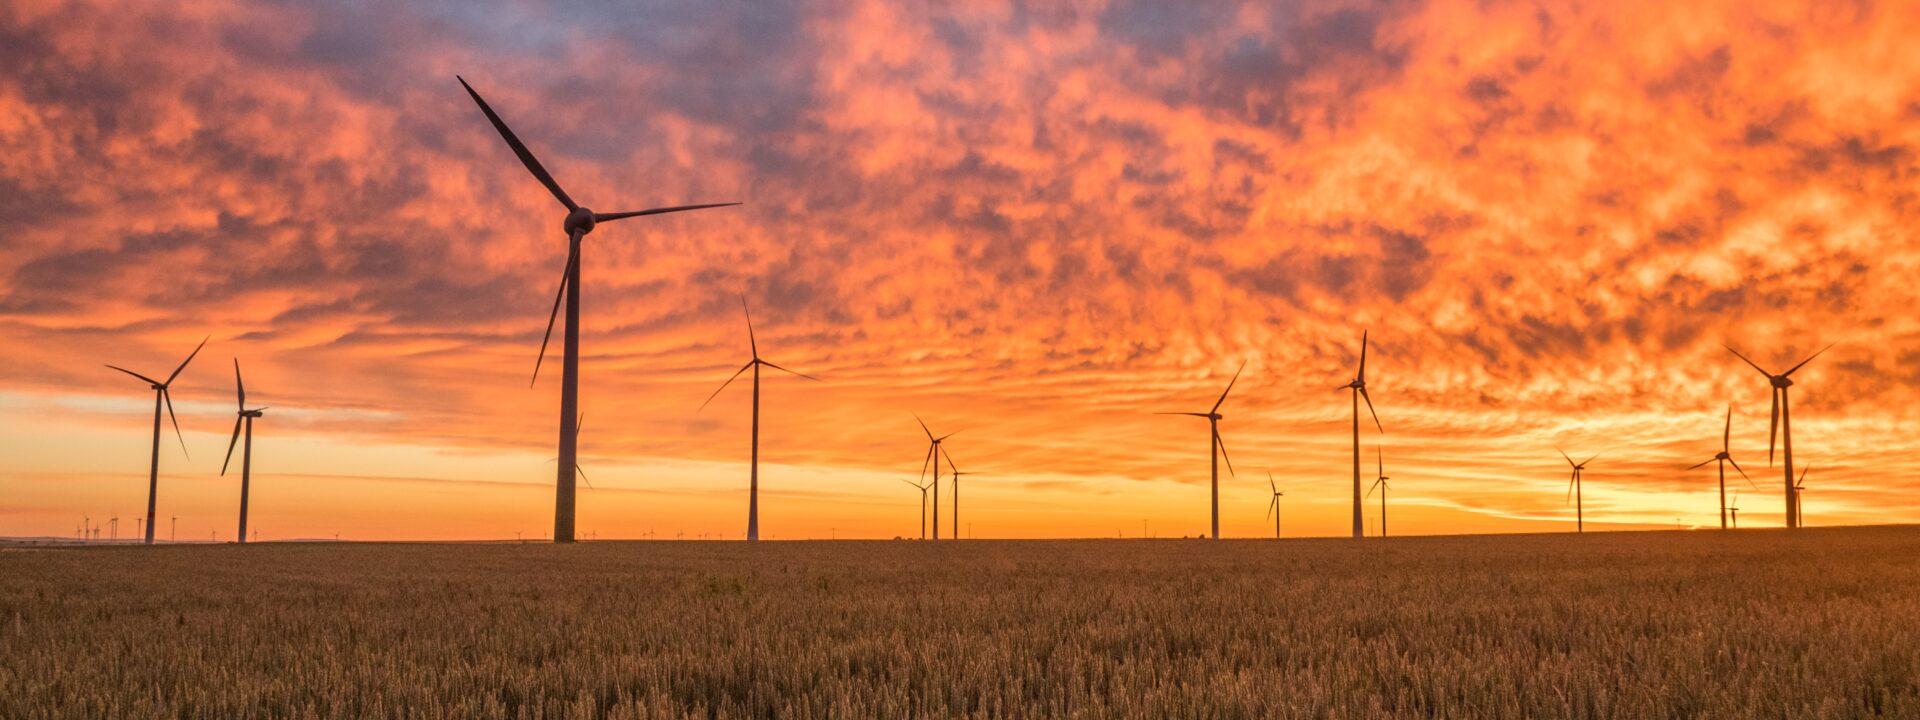 Google, Apex Clean Energy enter PPA for 189 MW North Carolina wind farm